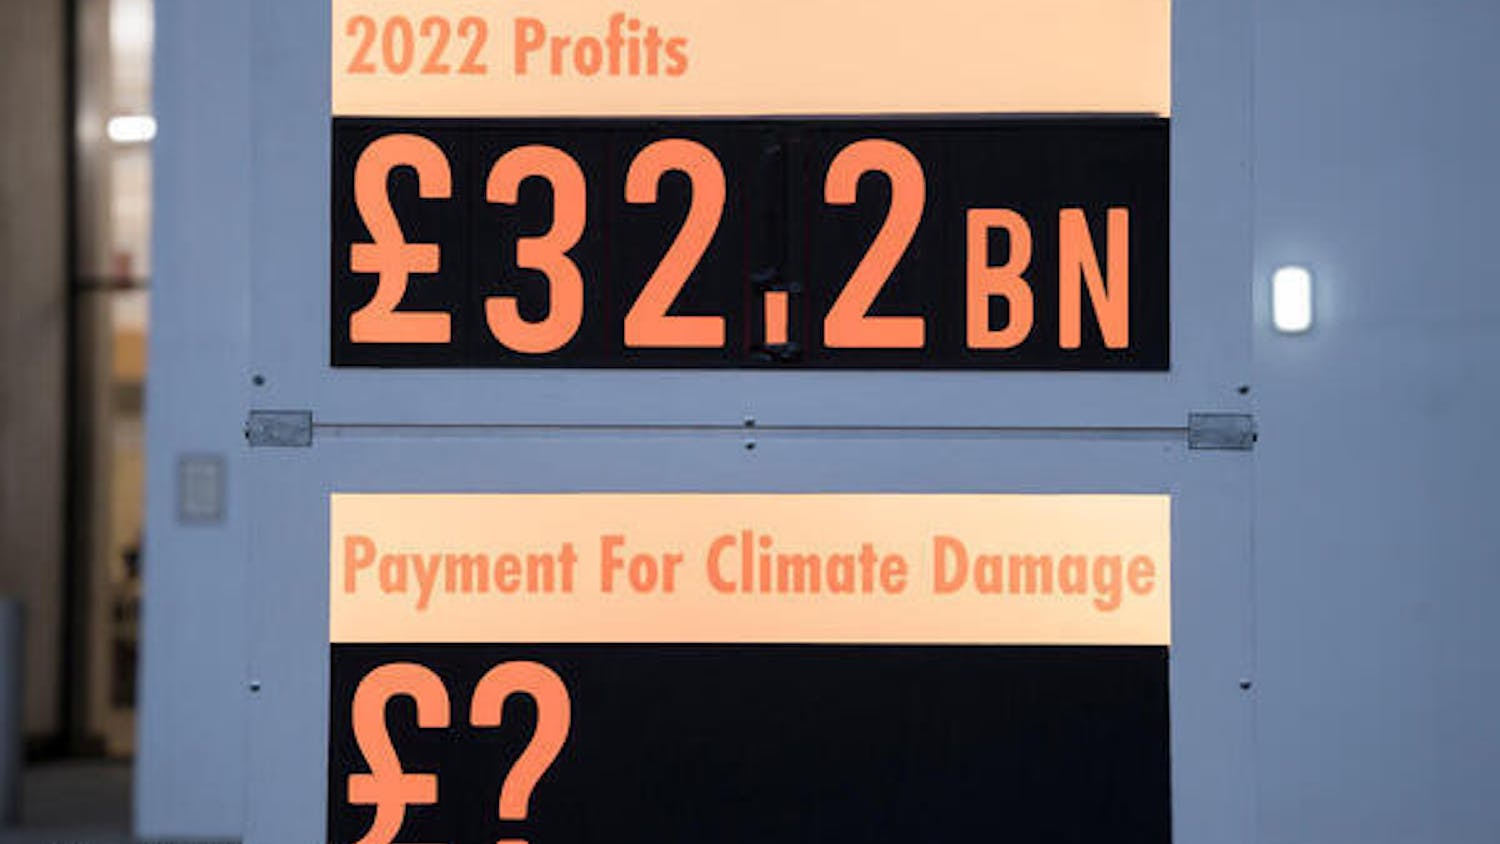 Greenpeace Shell Profits